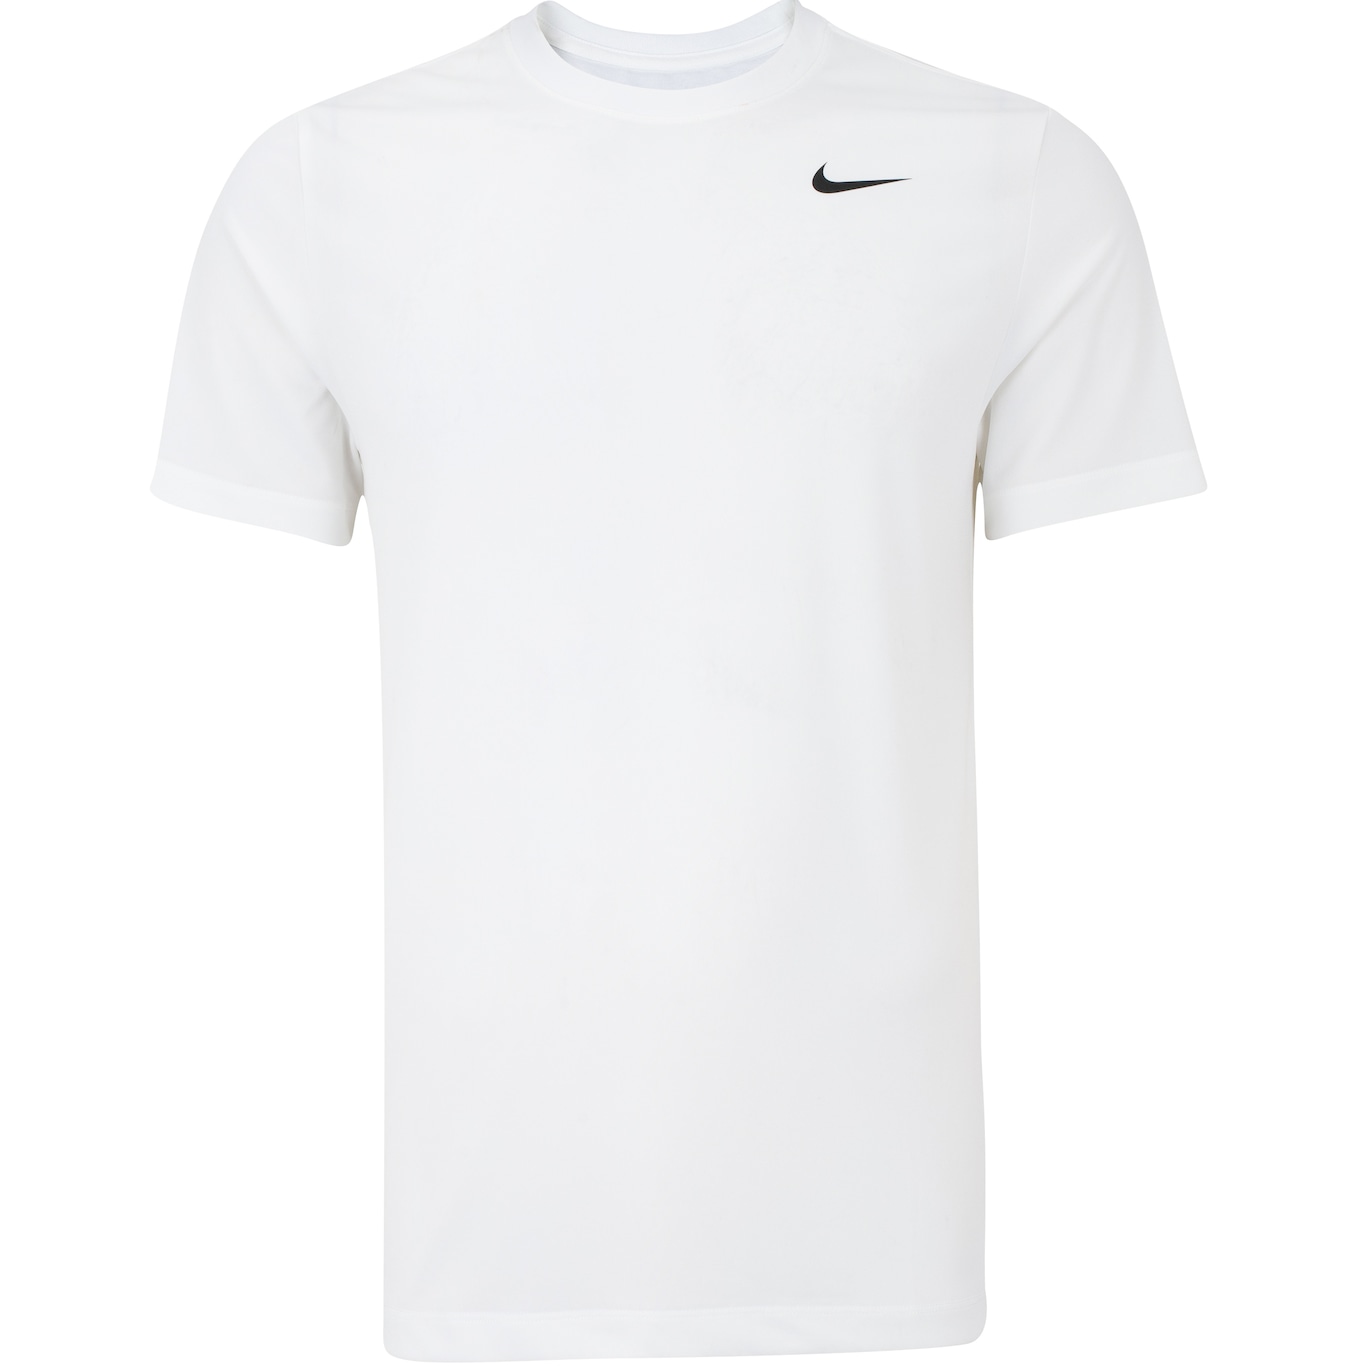 Camiseta Masculina Nike Dri-Fit Manga Curta M180RLGD RE - Foto 4